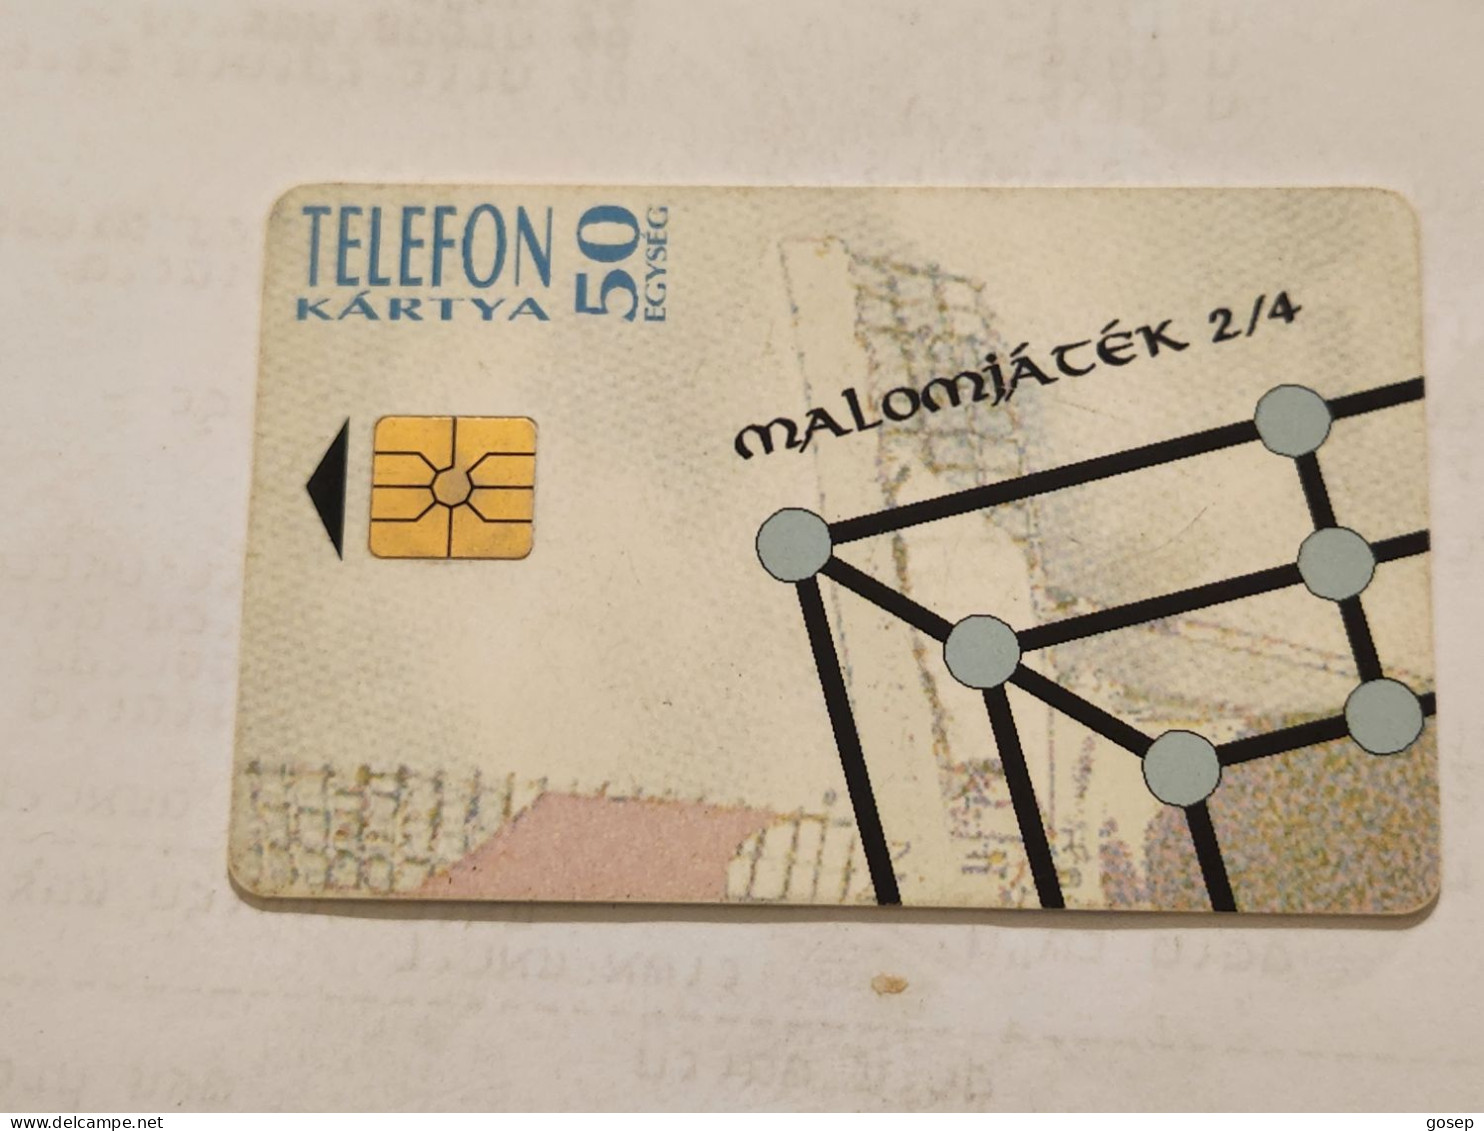 HUNGARY-(HU-P-1994-18Aa)-Malom -Tata (2/4)-(151)(50units)(1994)(tirage-250.000)-USED CARD+1card Prepiad Free - Hungary